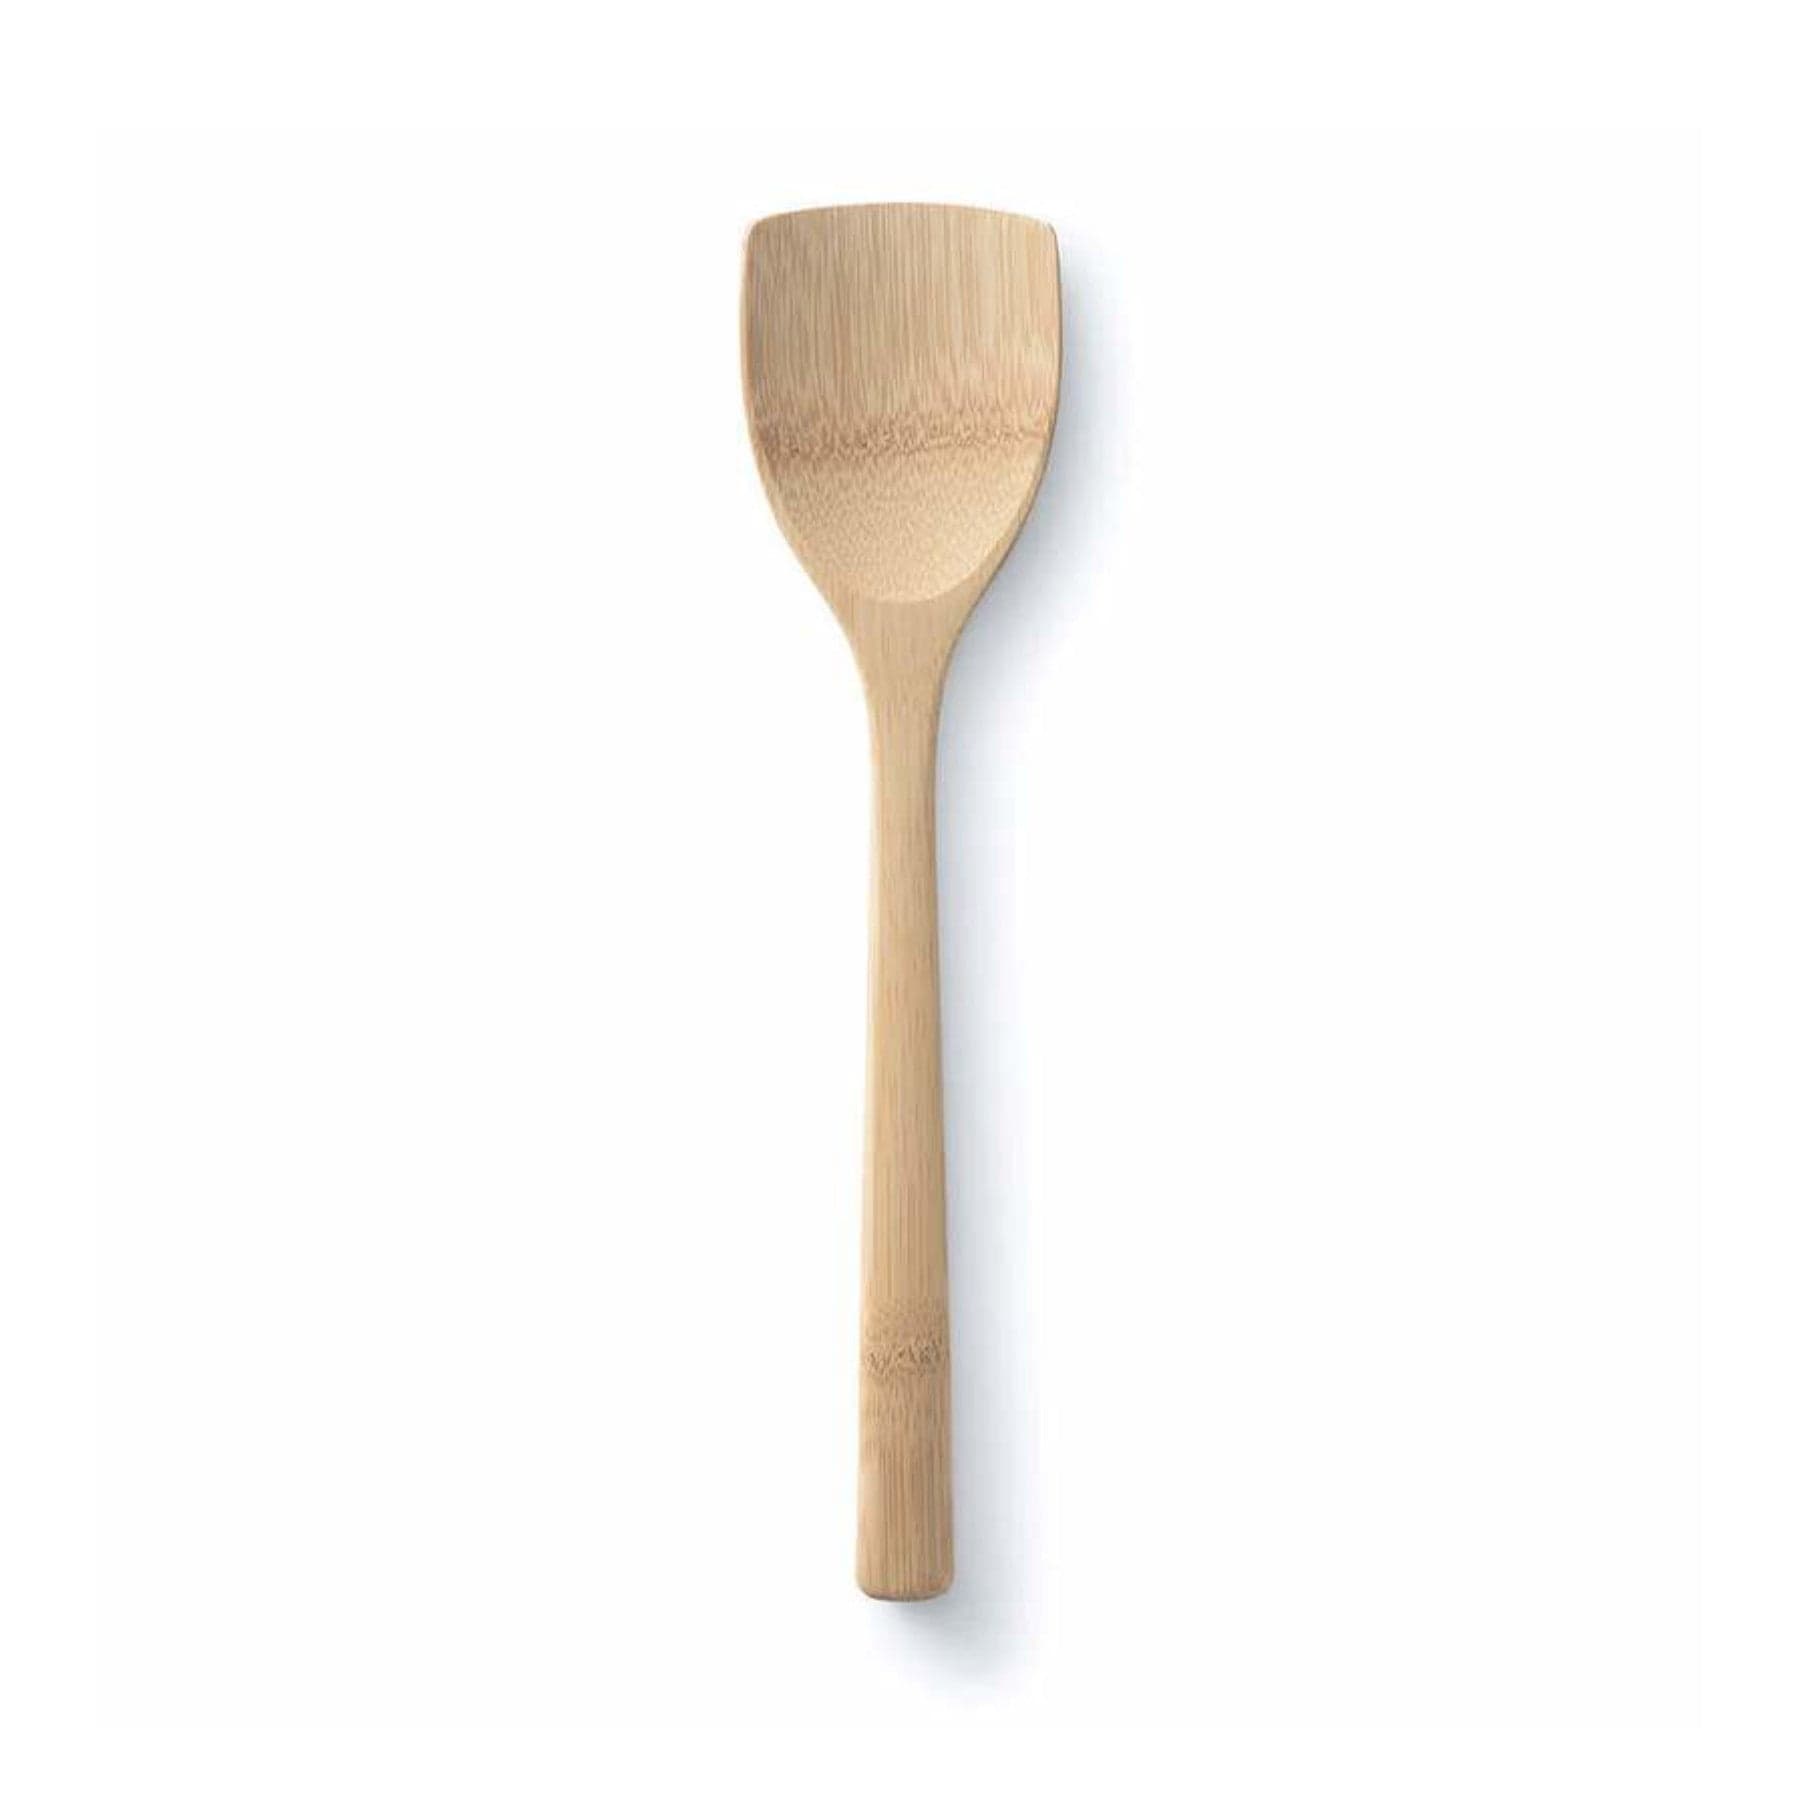 Bamboo wok spatula